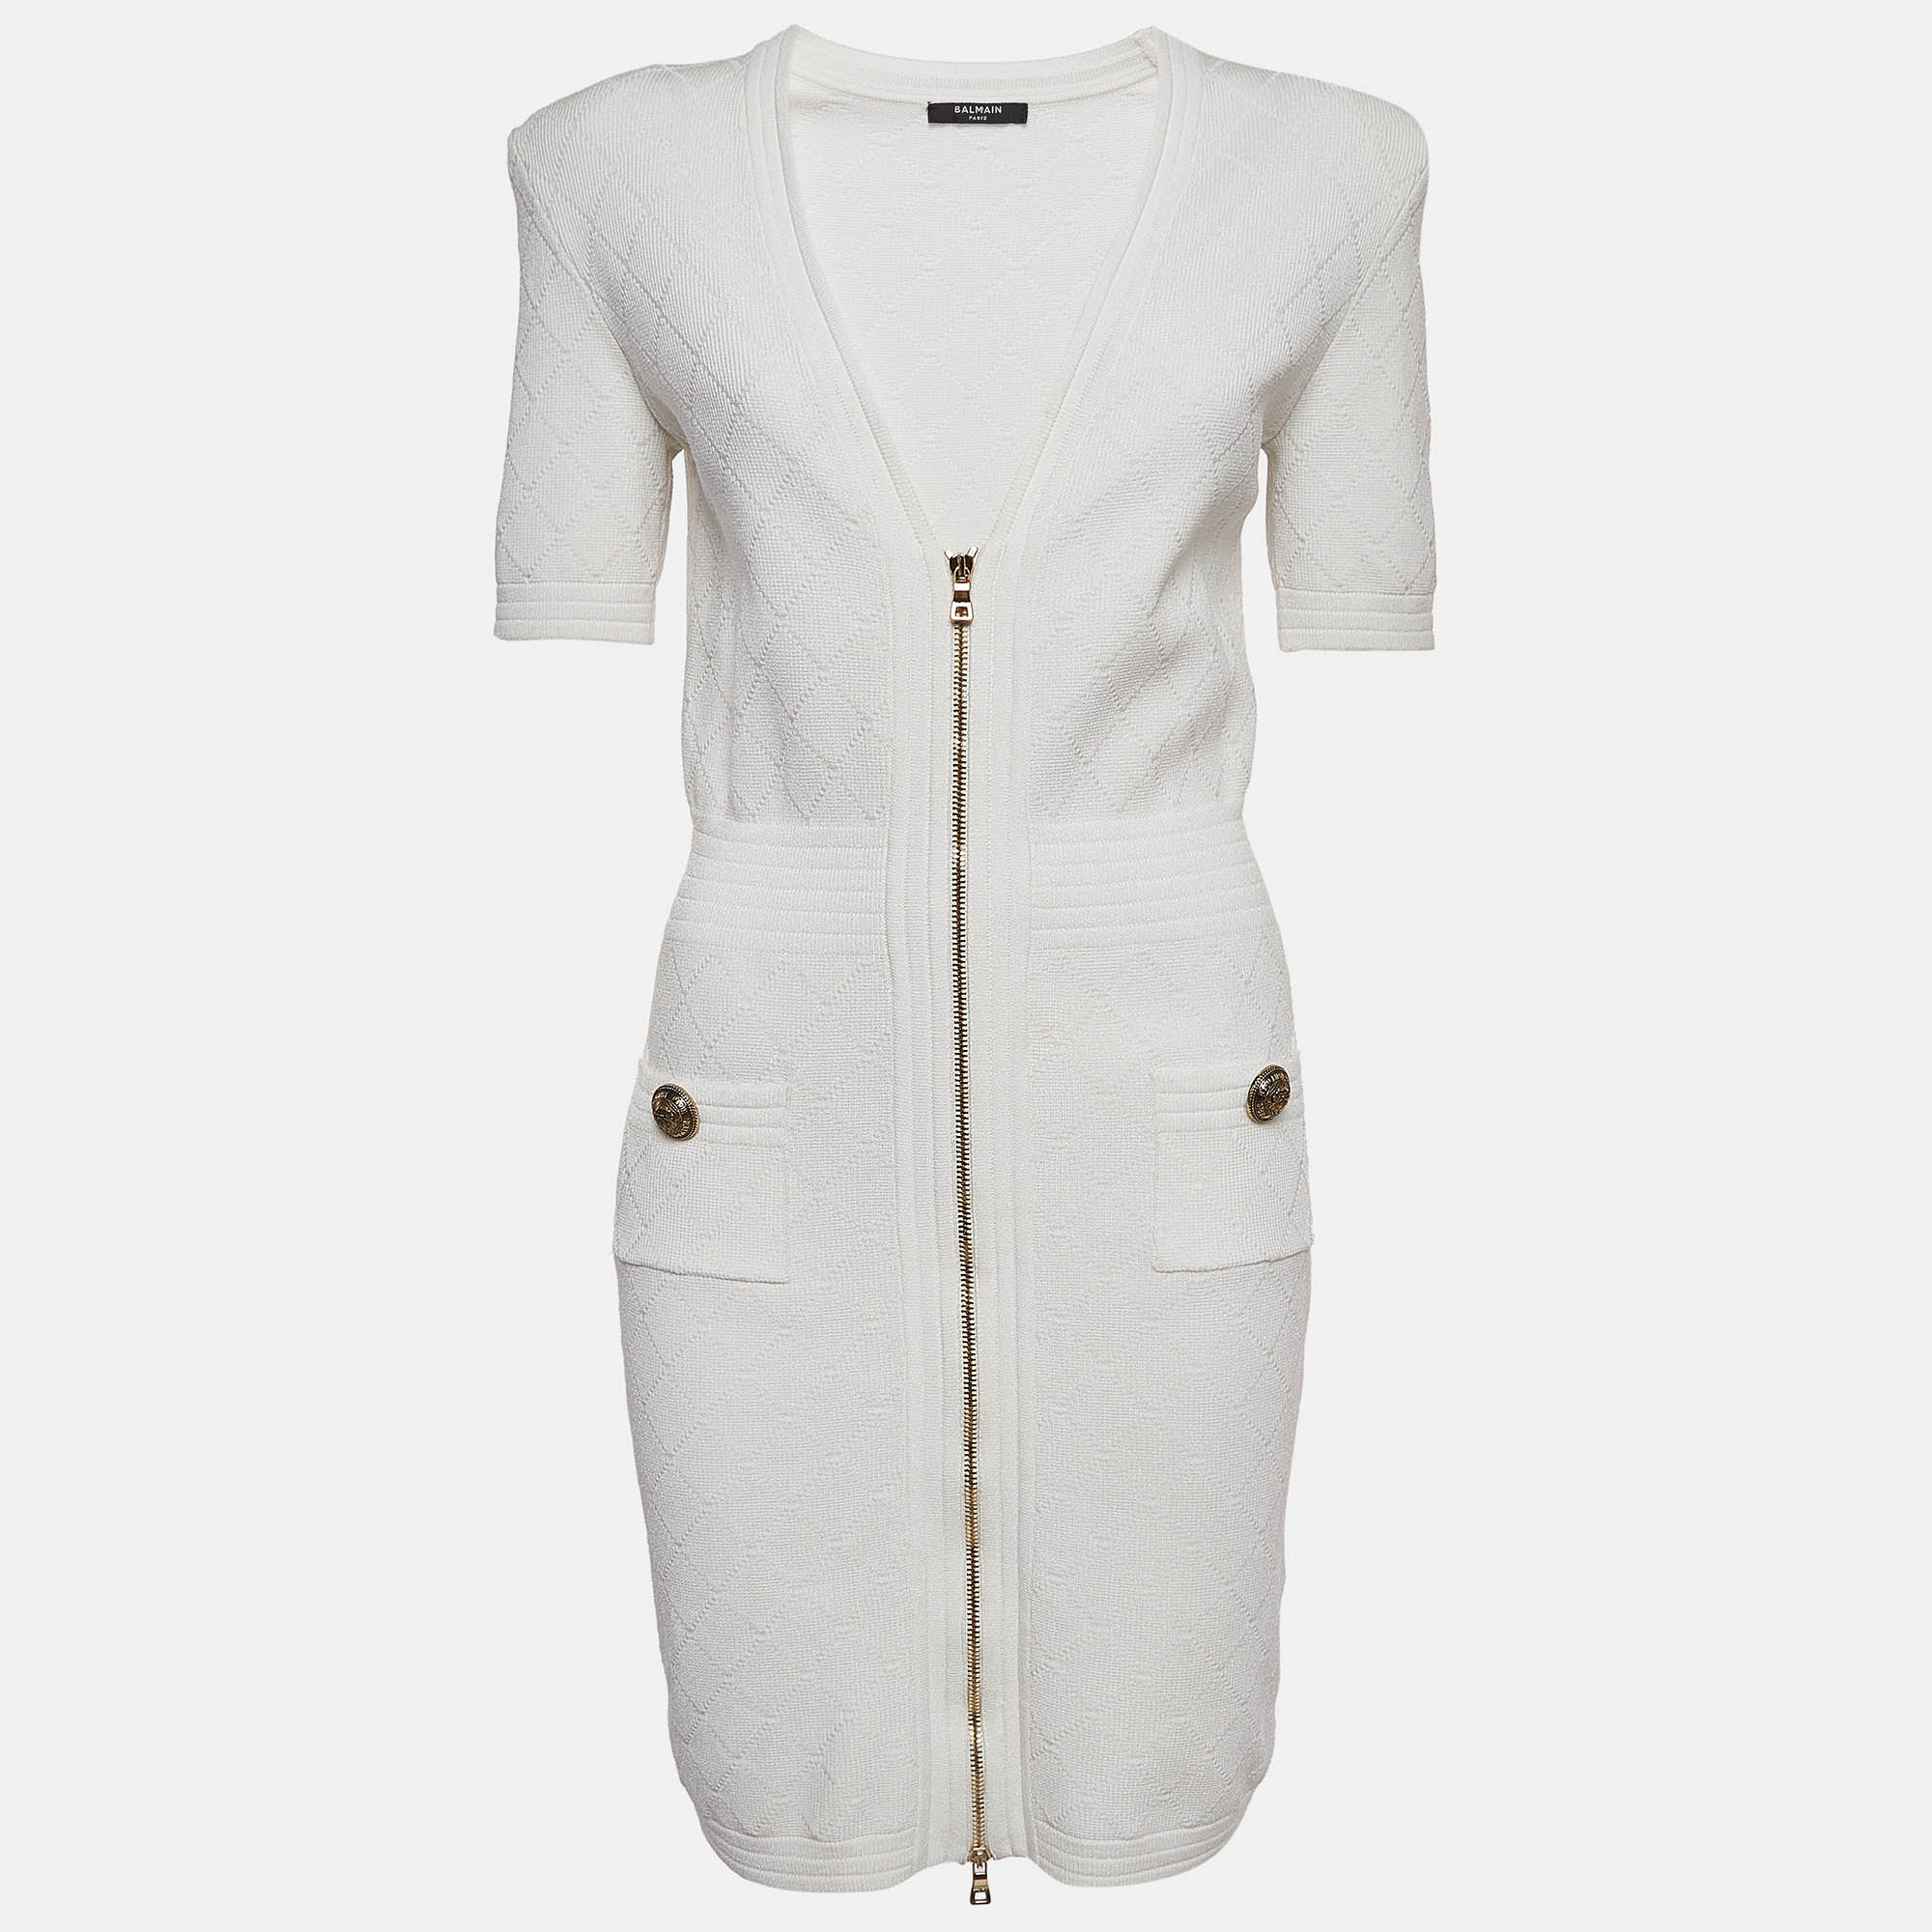 Balmain white patterned knit zip front short dress m